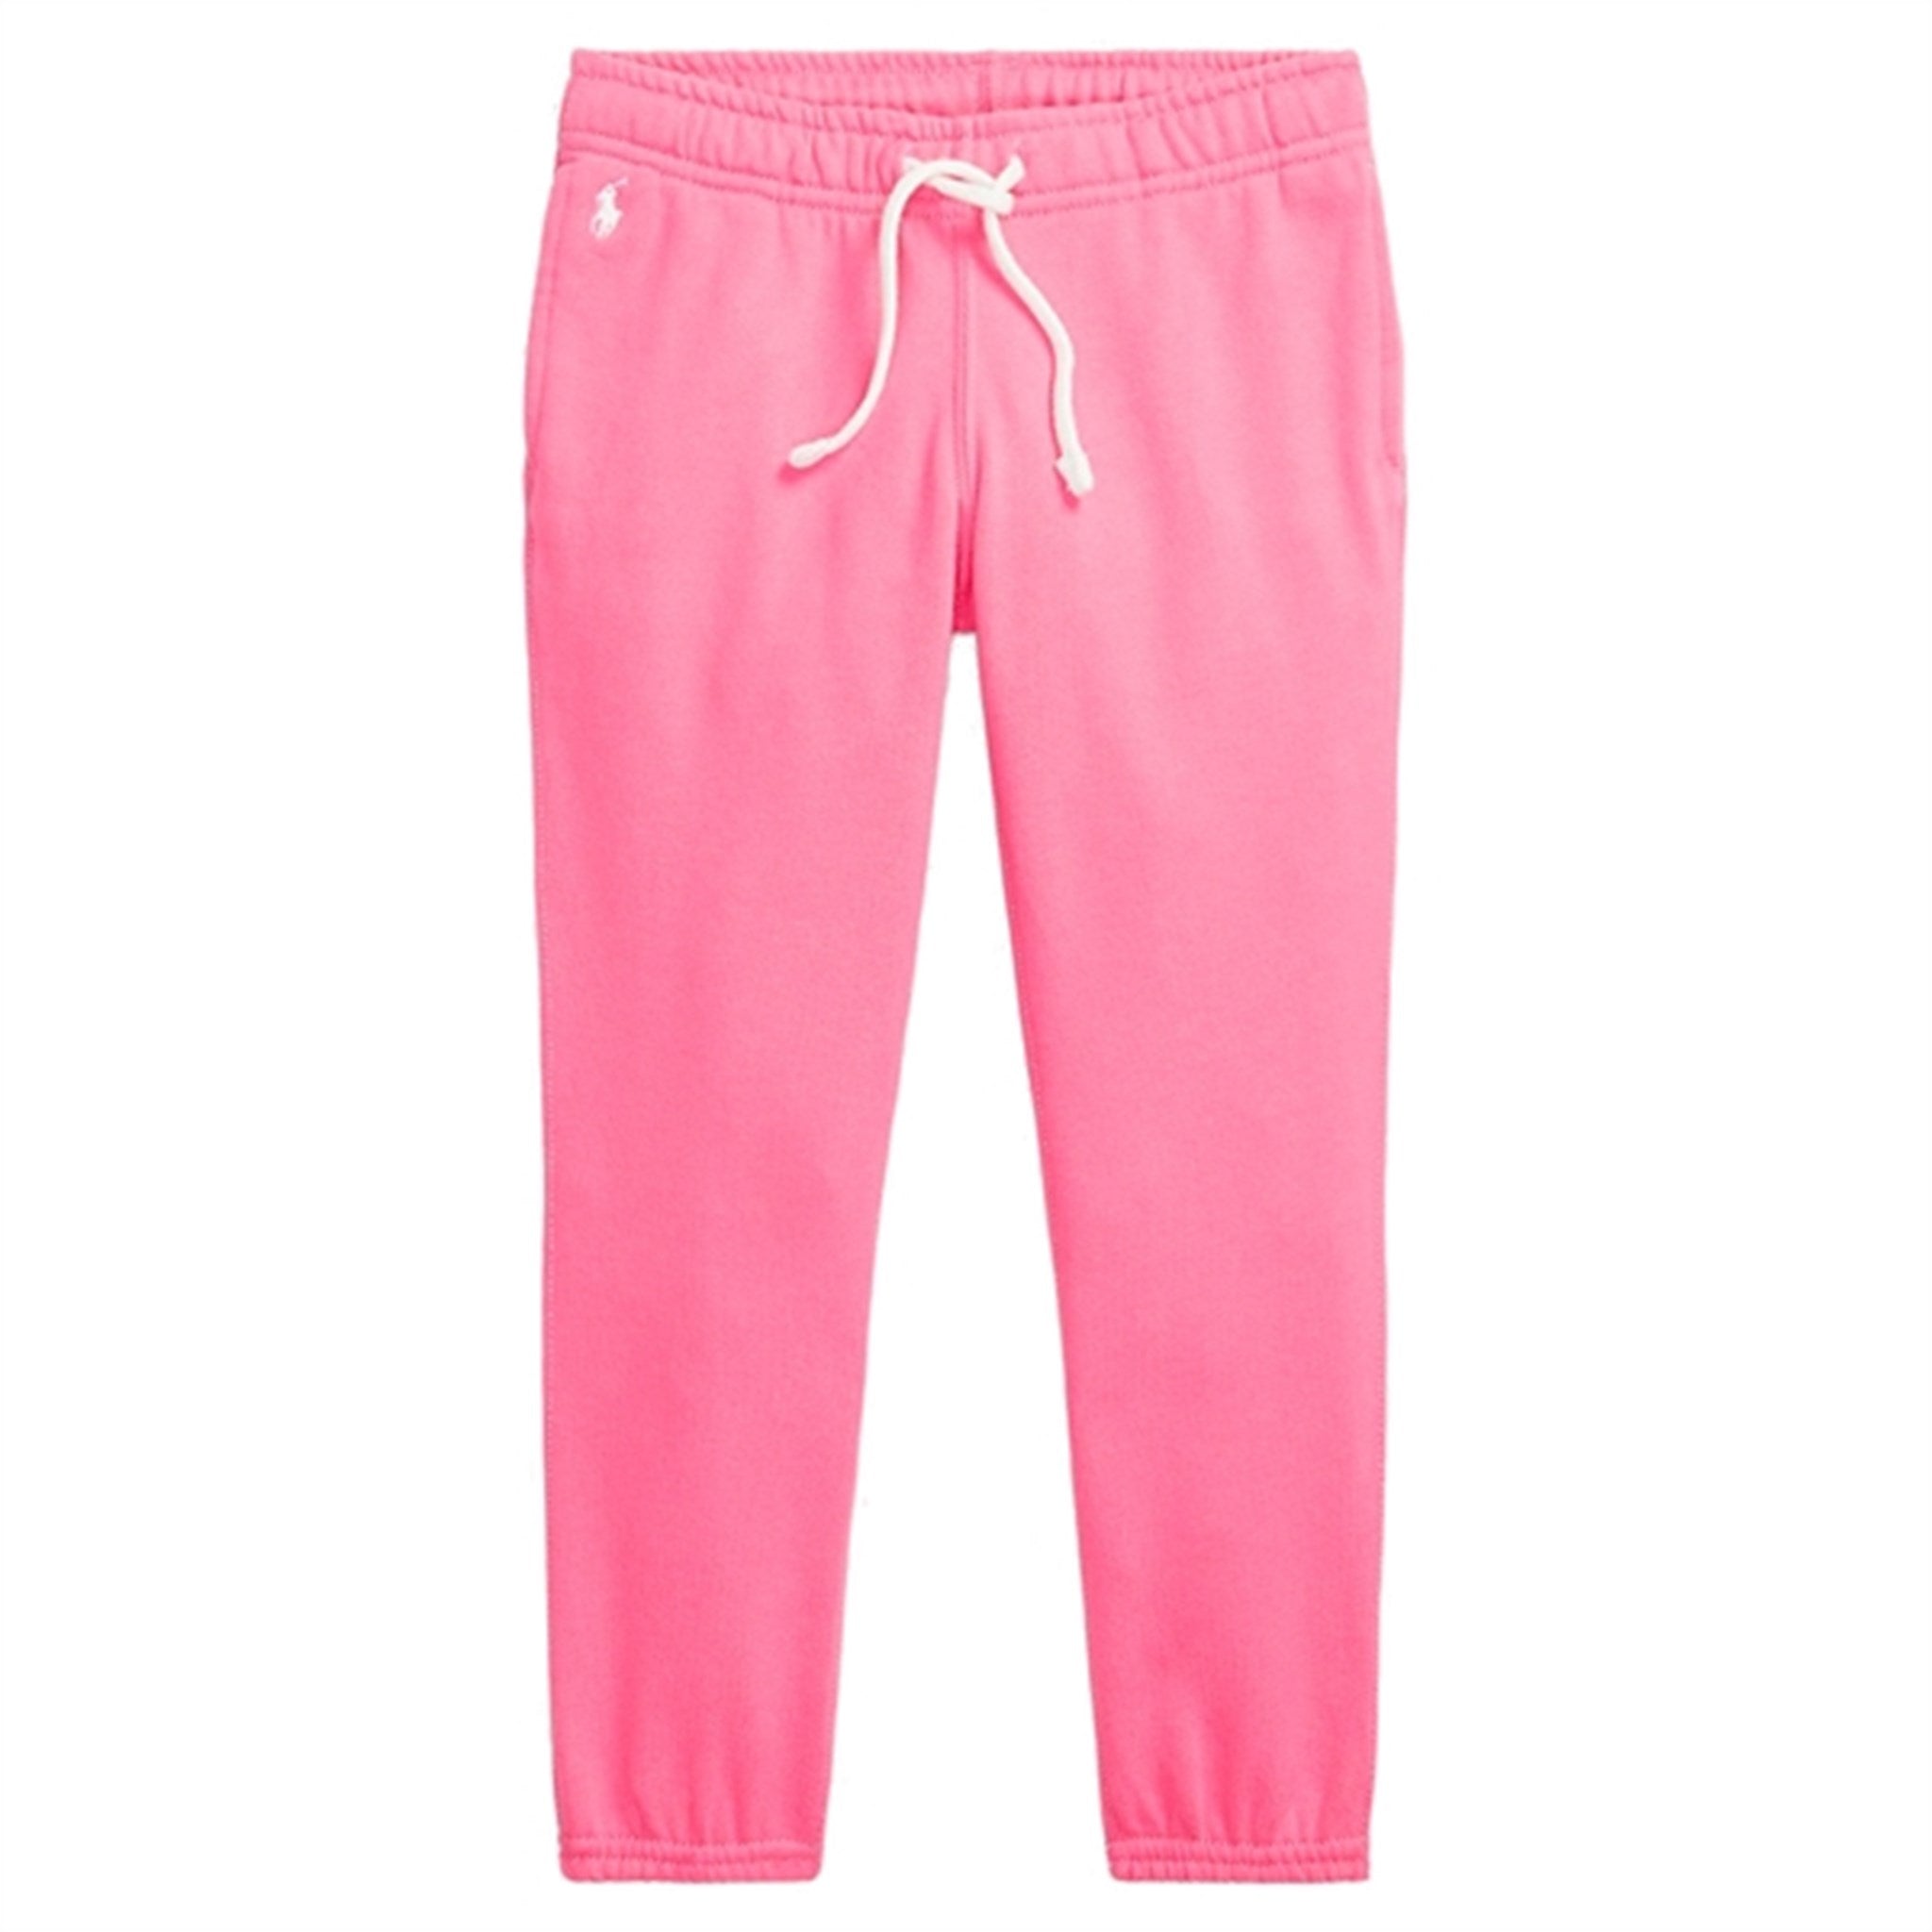 Polo Ralph Lauren Athletic Tights Carmel Pink